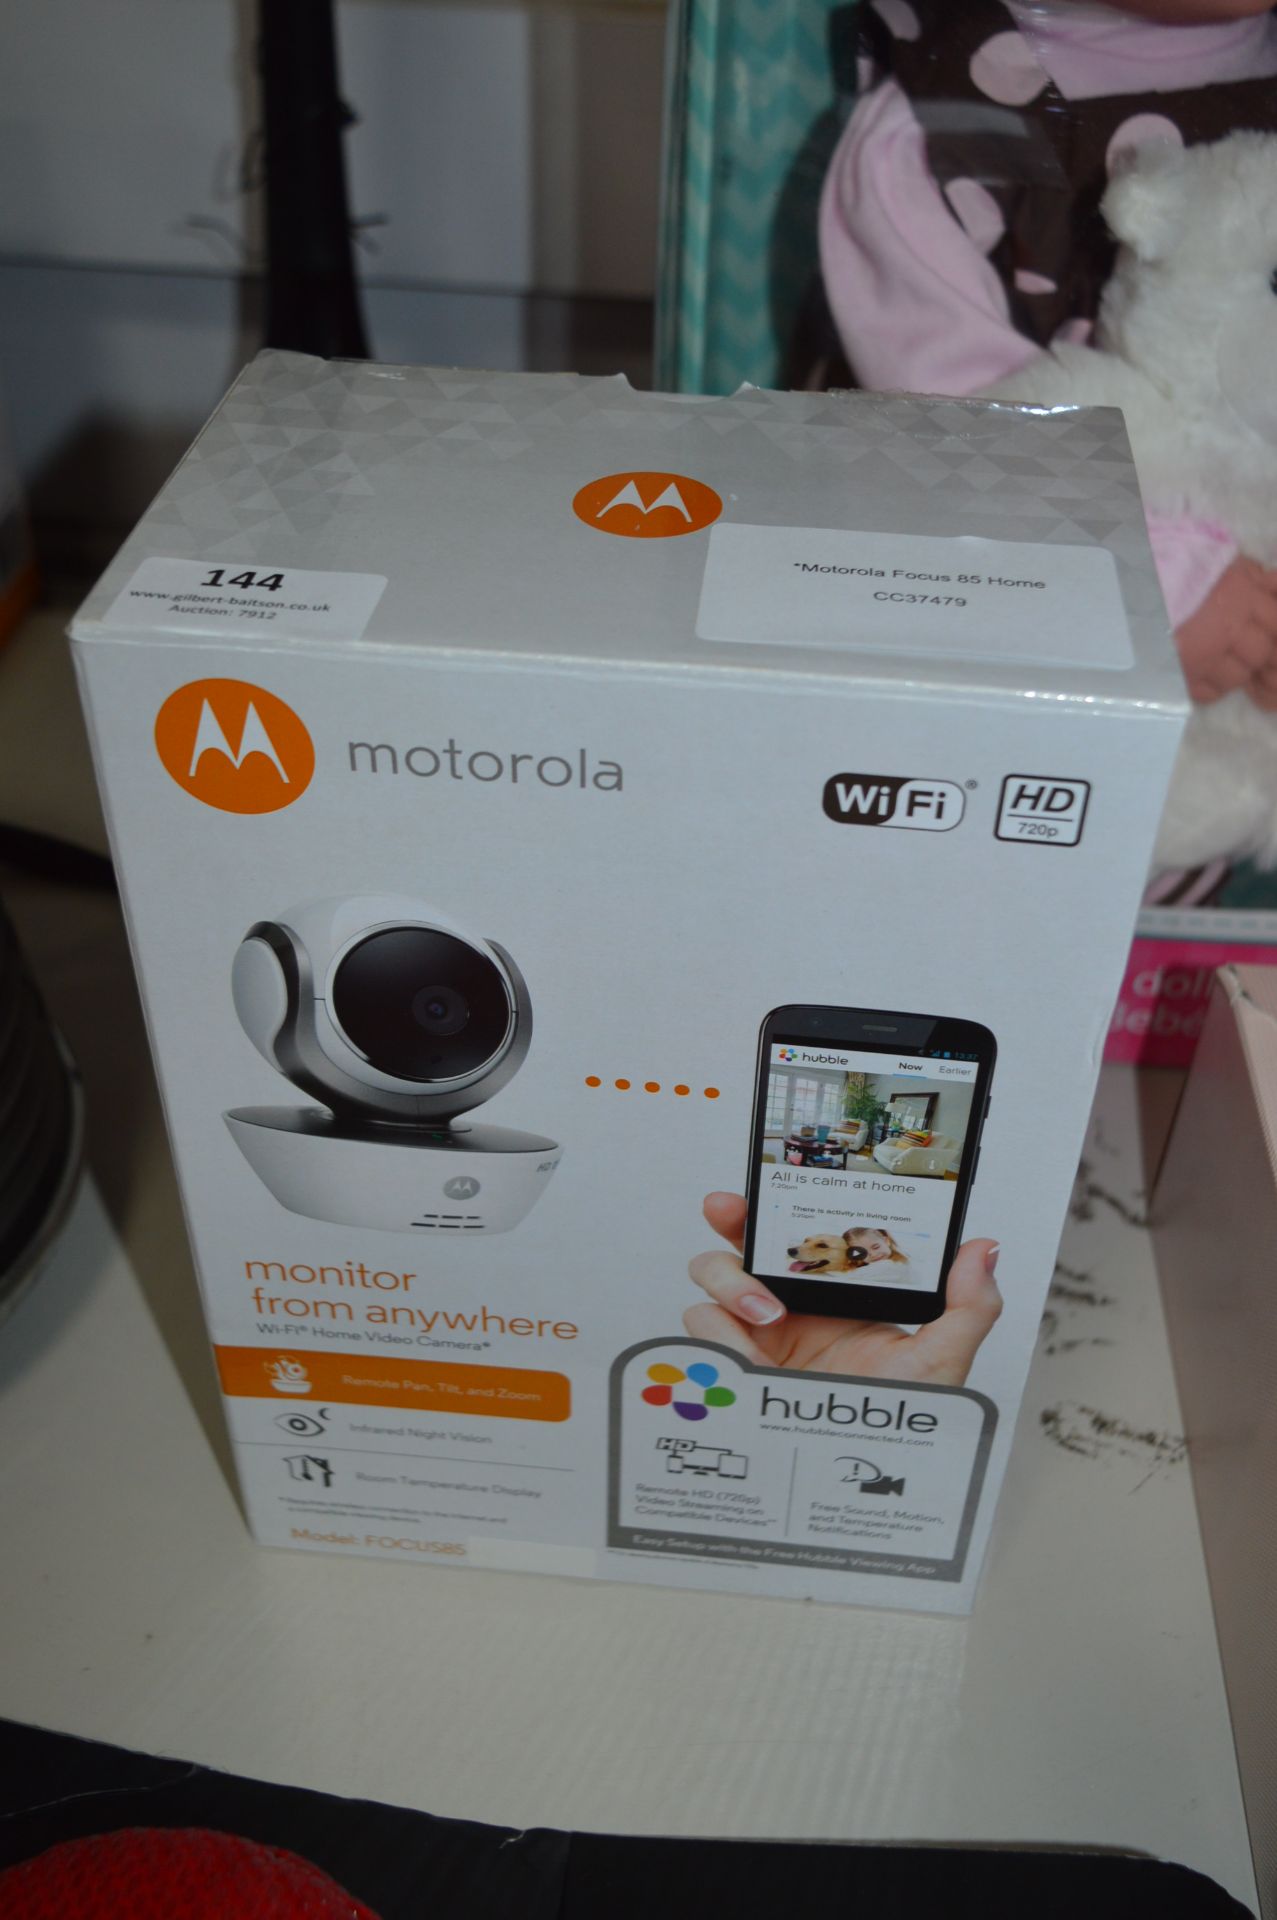 *Motorola Focus 85 Home Wifi Camera